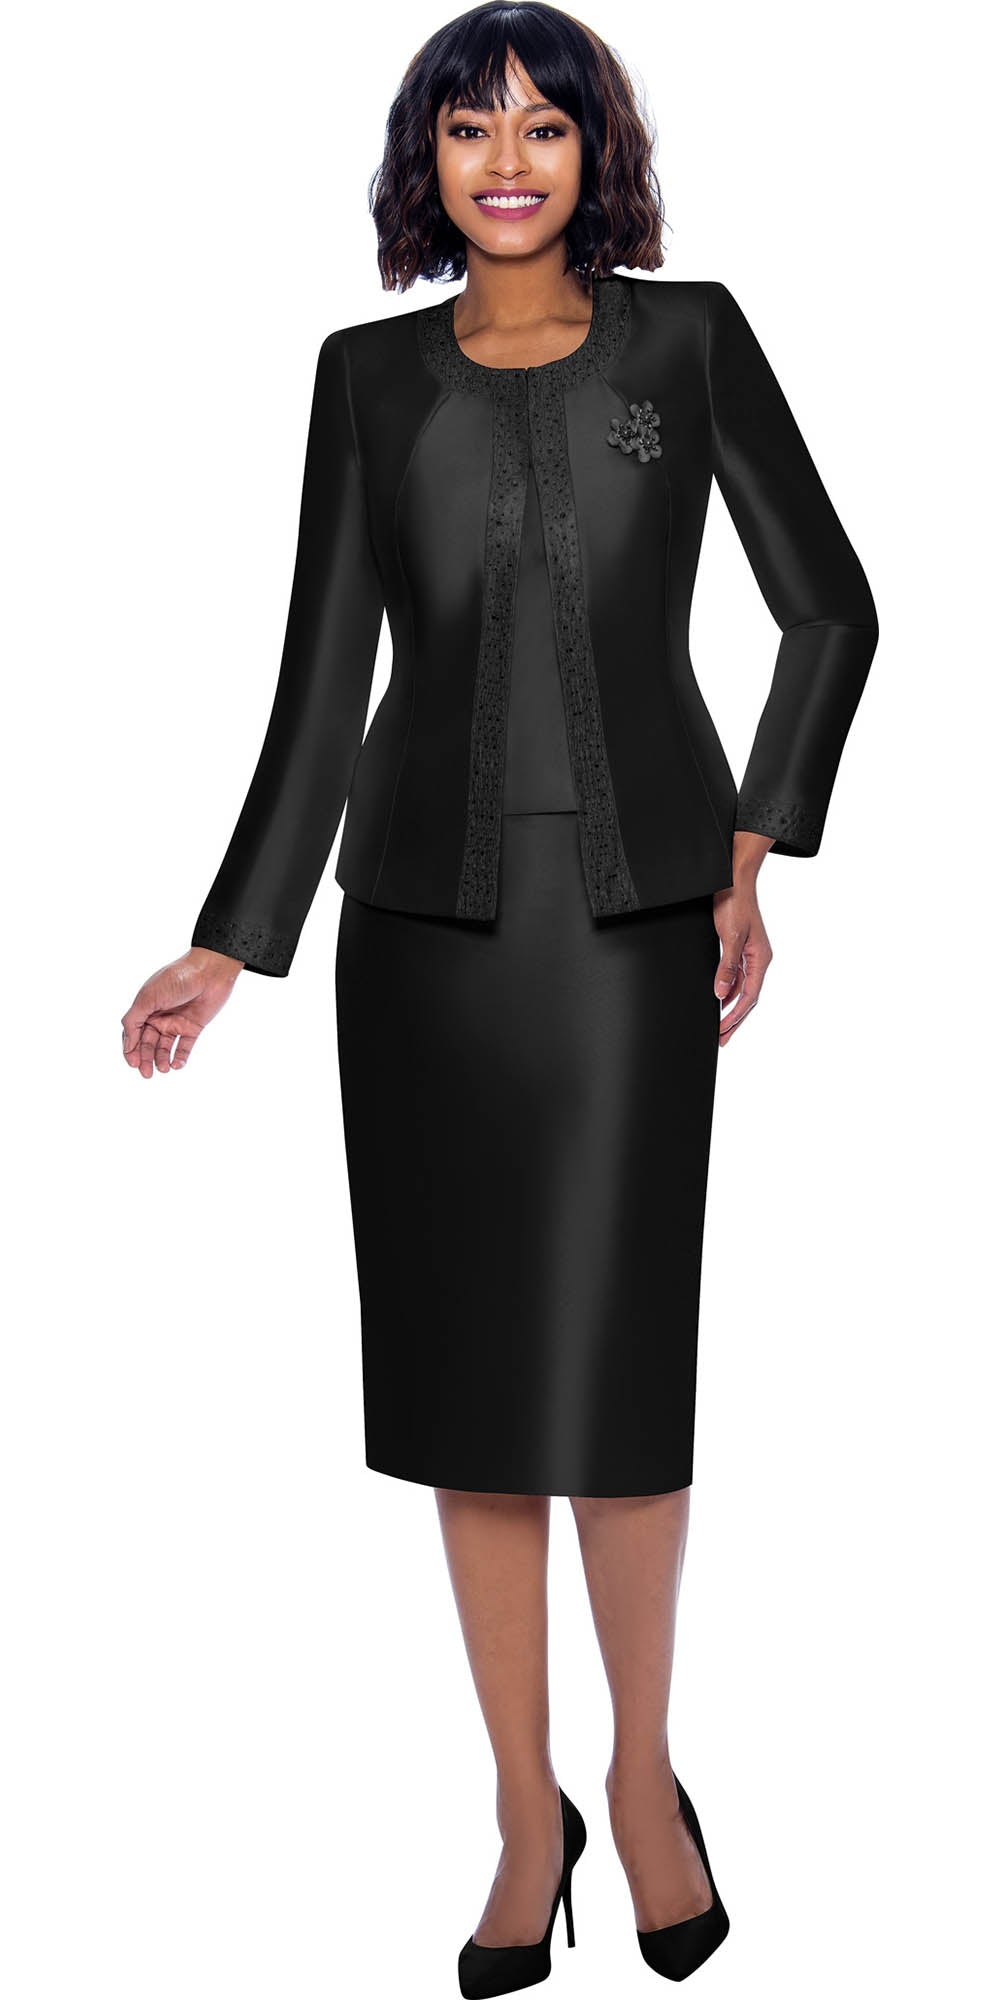 Terramina 7637 - Black - Church Suit With Embellished Trim On Jacket